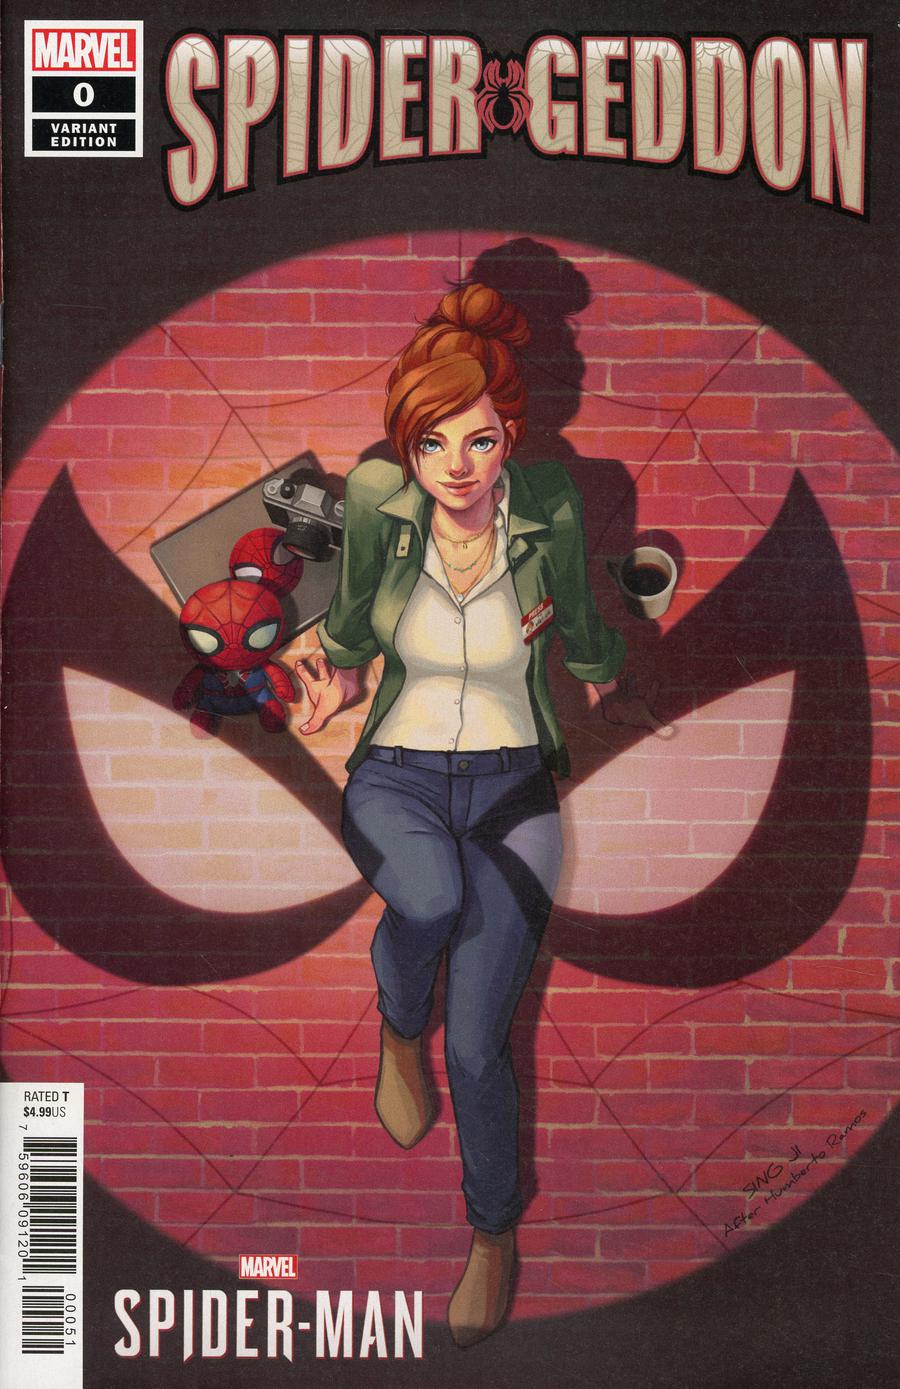 Spider-Geddon #0 Cover C Incentive Sing Ji Marvels Spider-Man Video Game Variant Cover